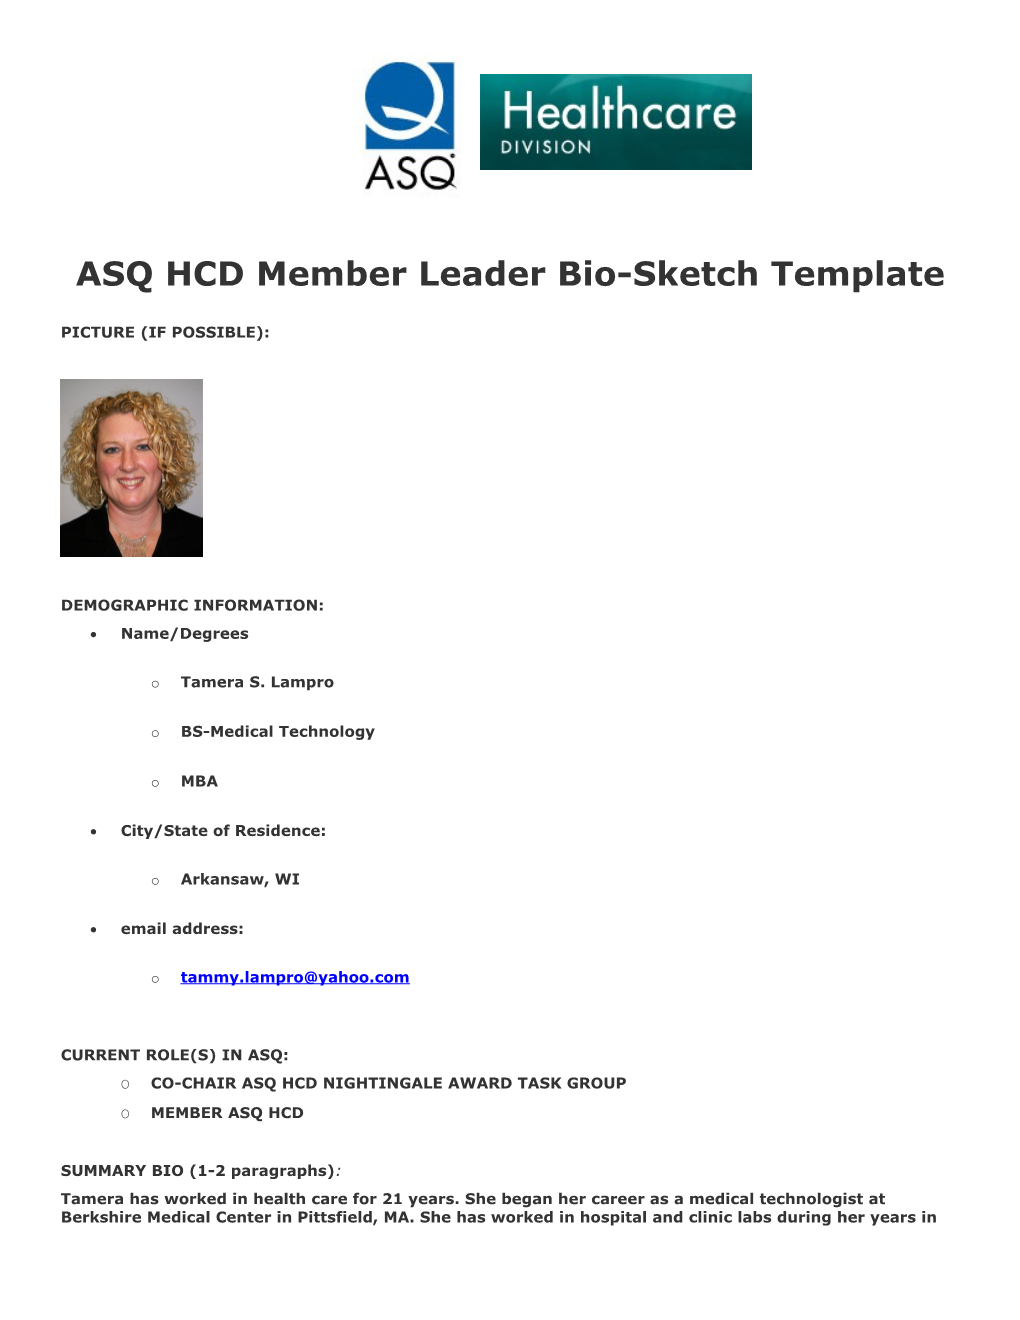 ASQ HCD Member Leader Bio-Sketch Template s1